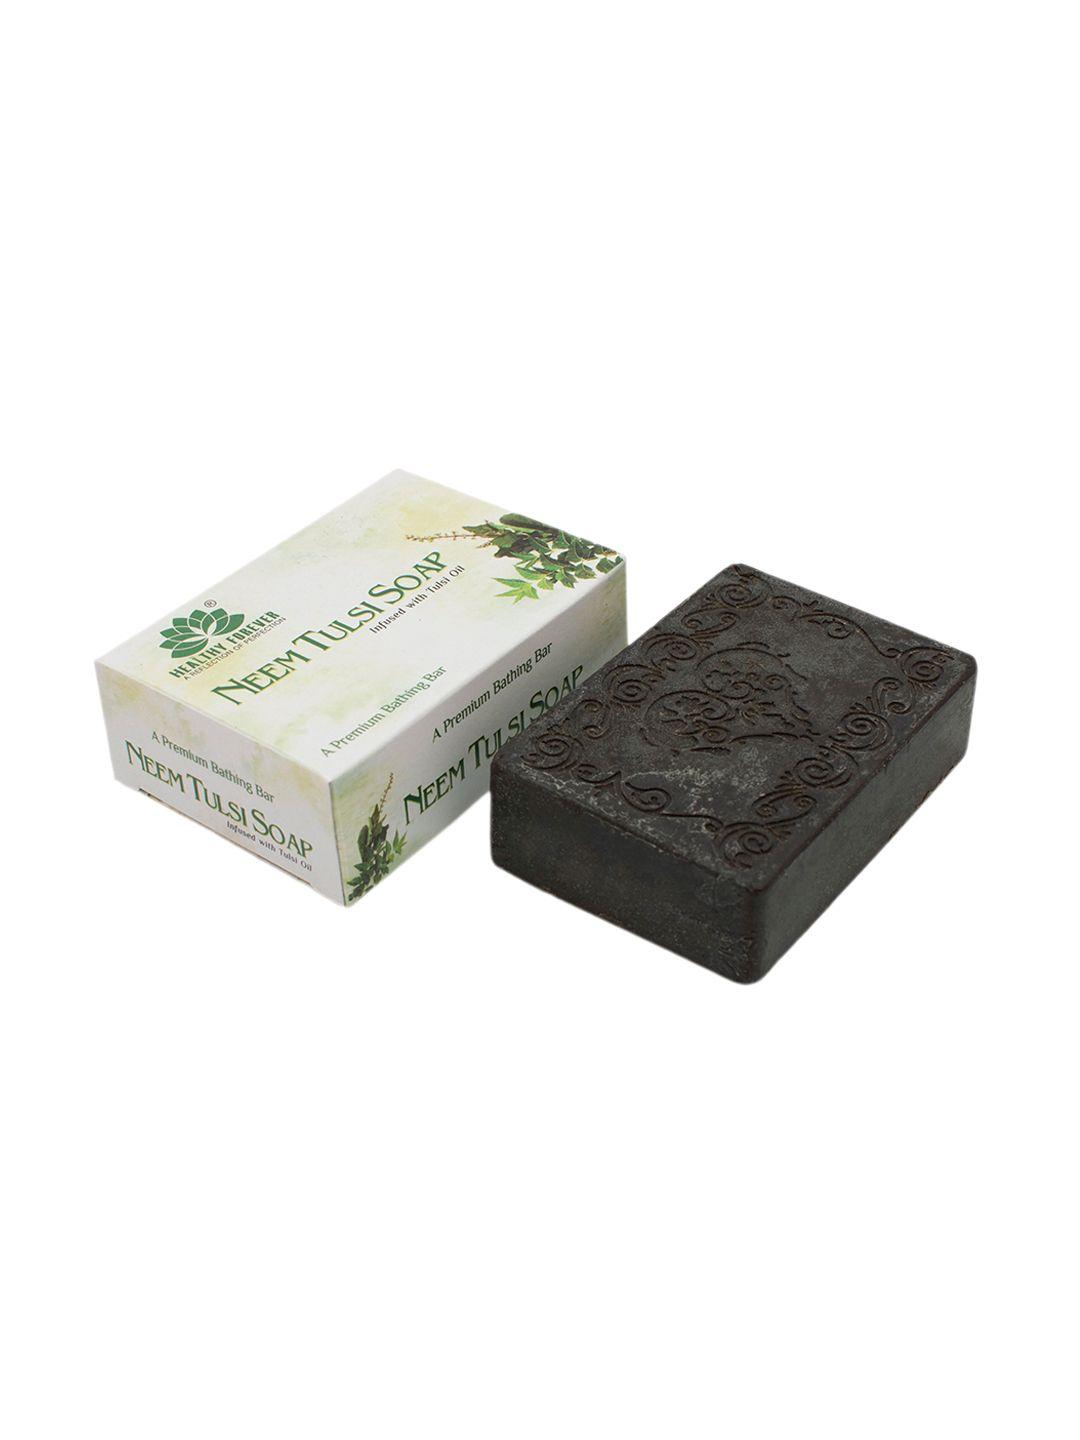 healthy forever neem tulsi soap for acne & dark spots - 120g